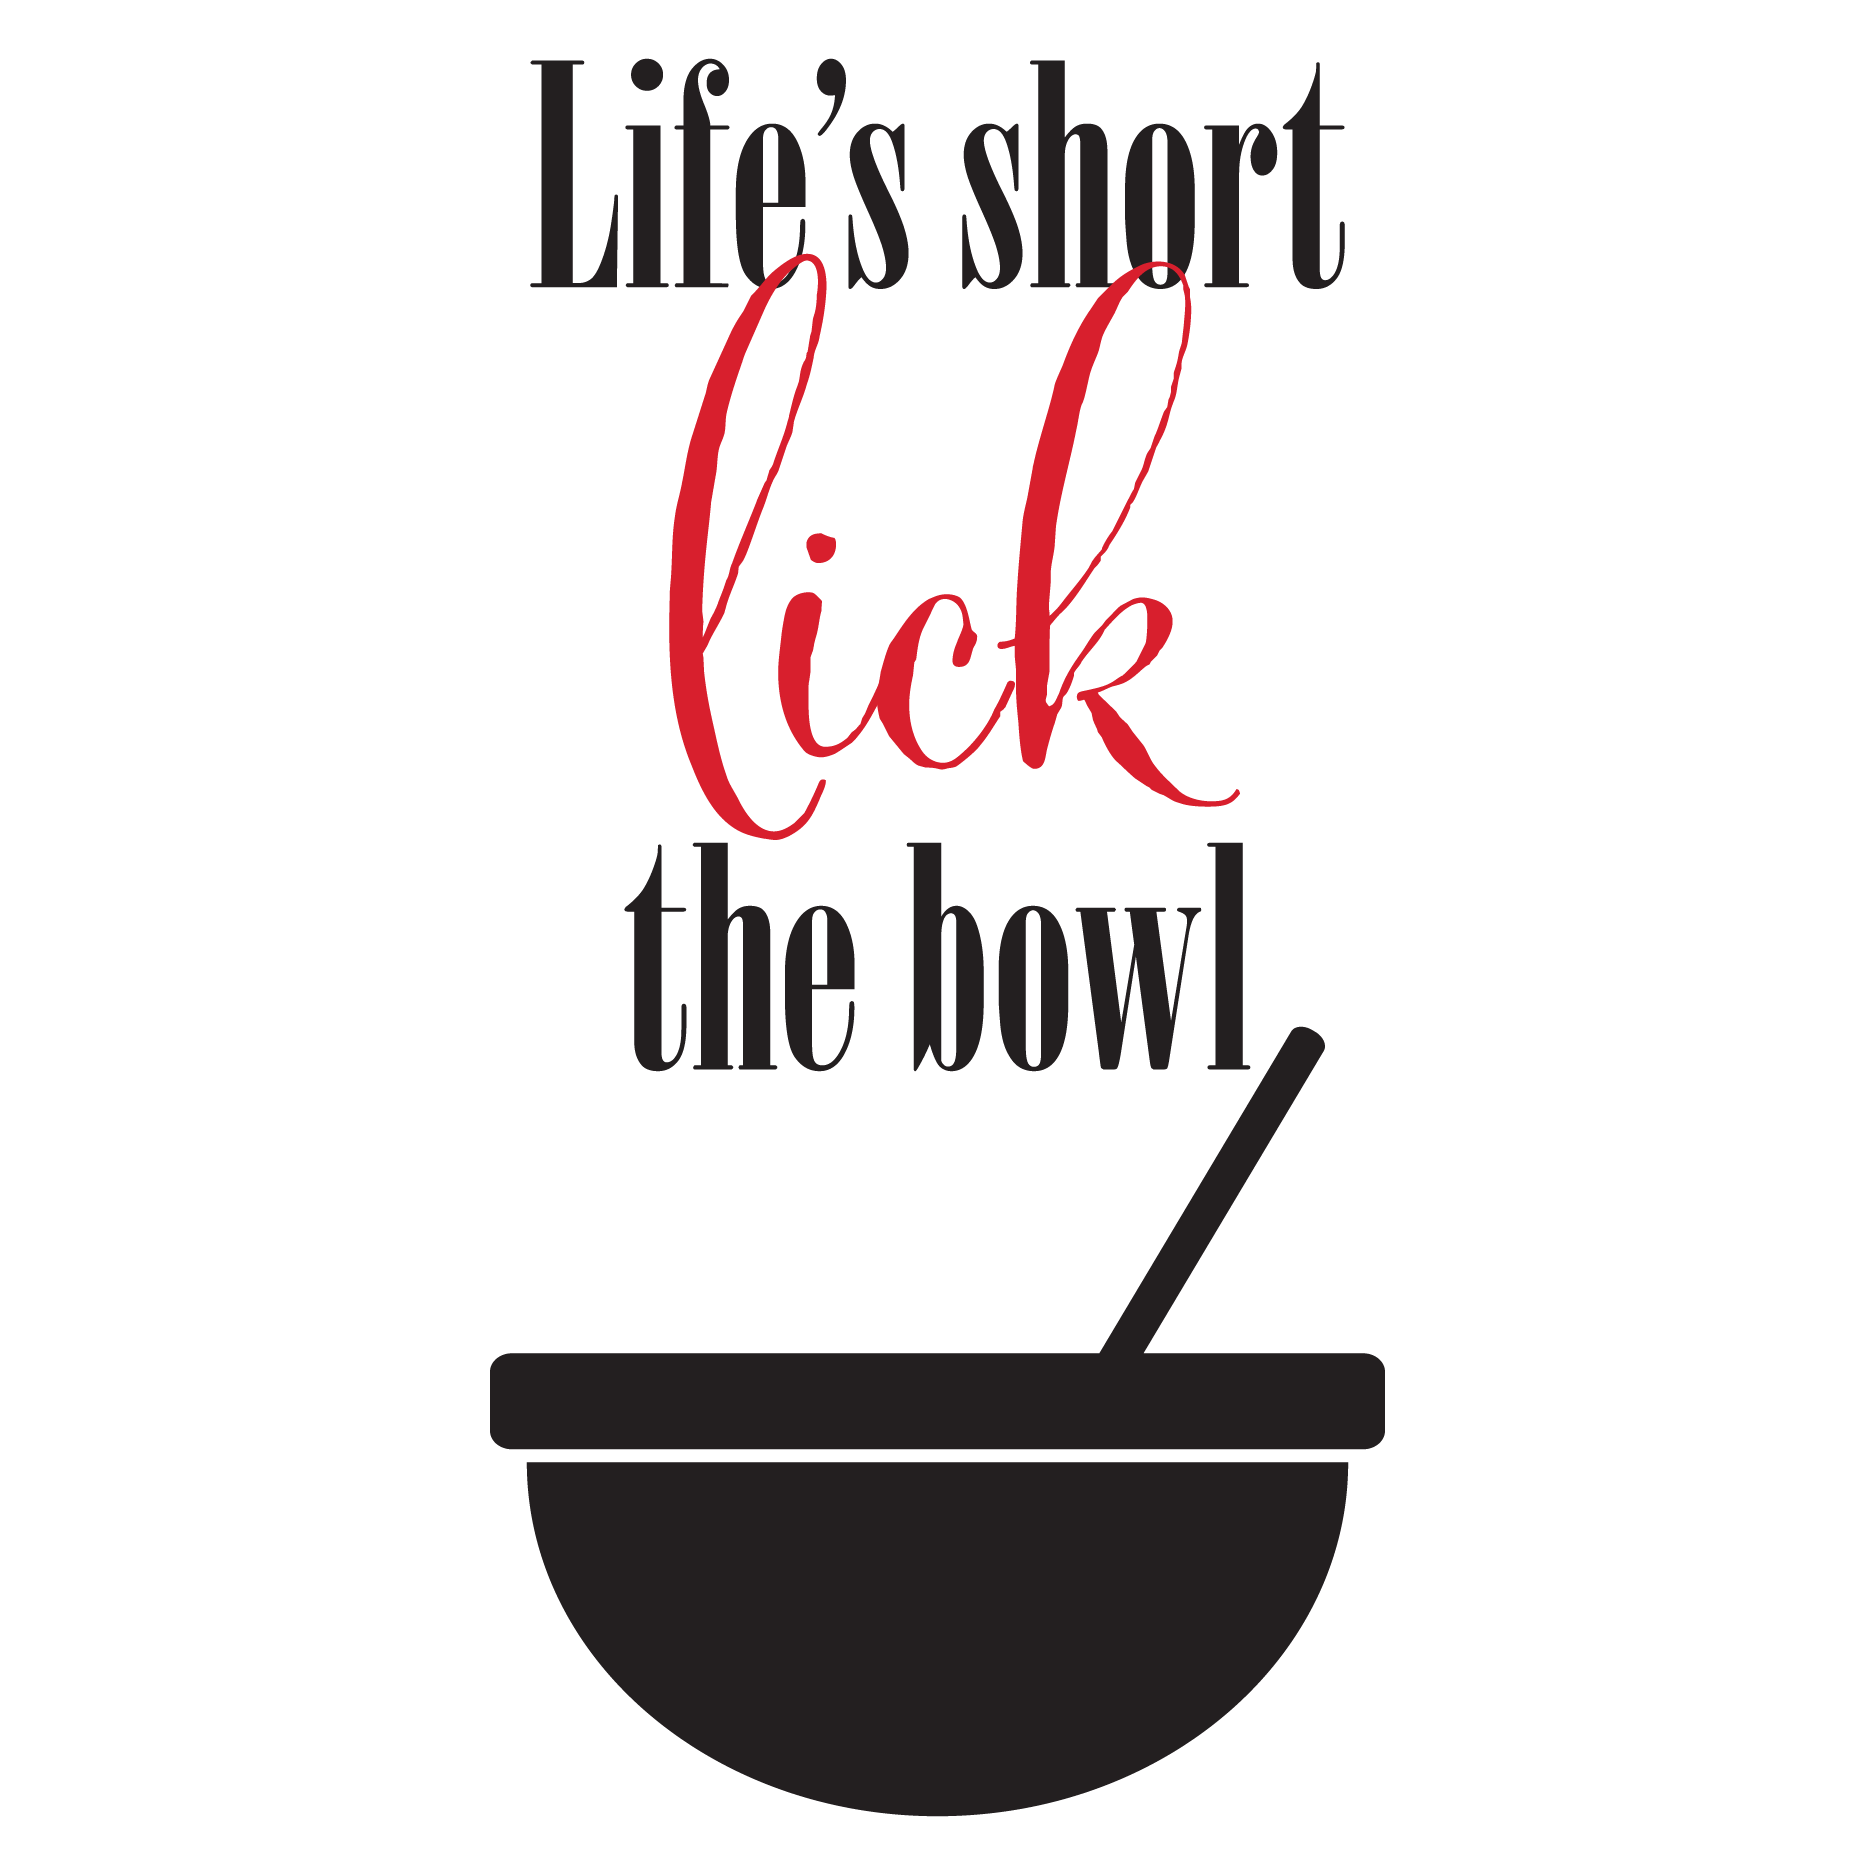 lifes short lick the bowl wall quotes decal wallquotescom